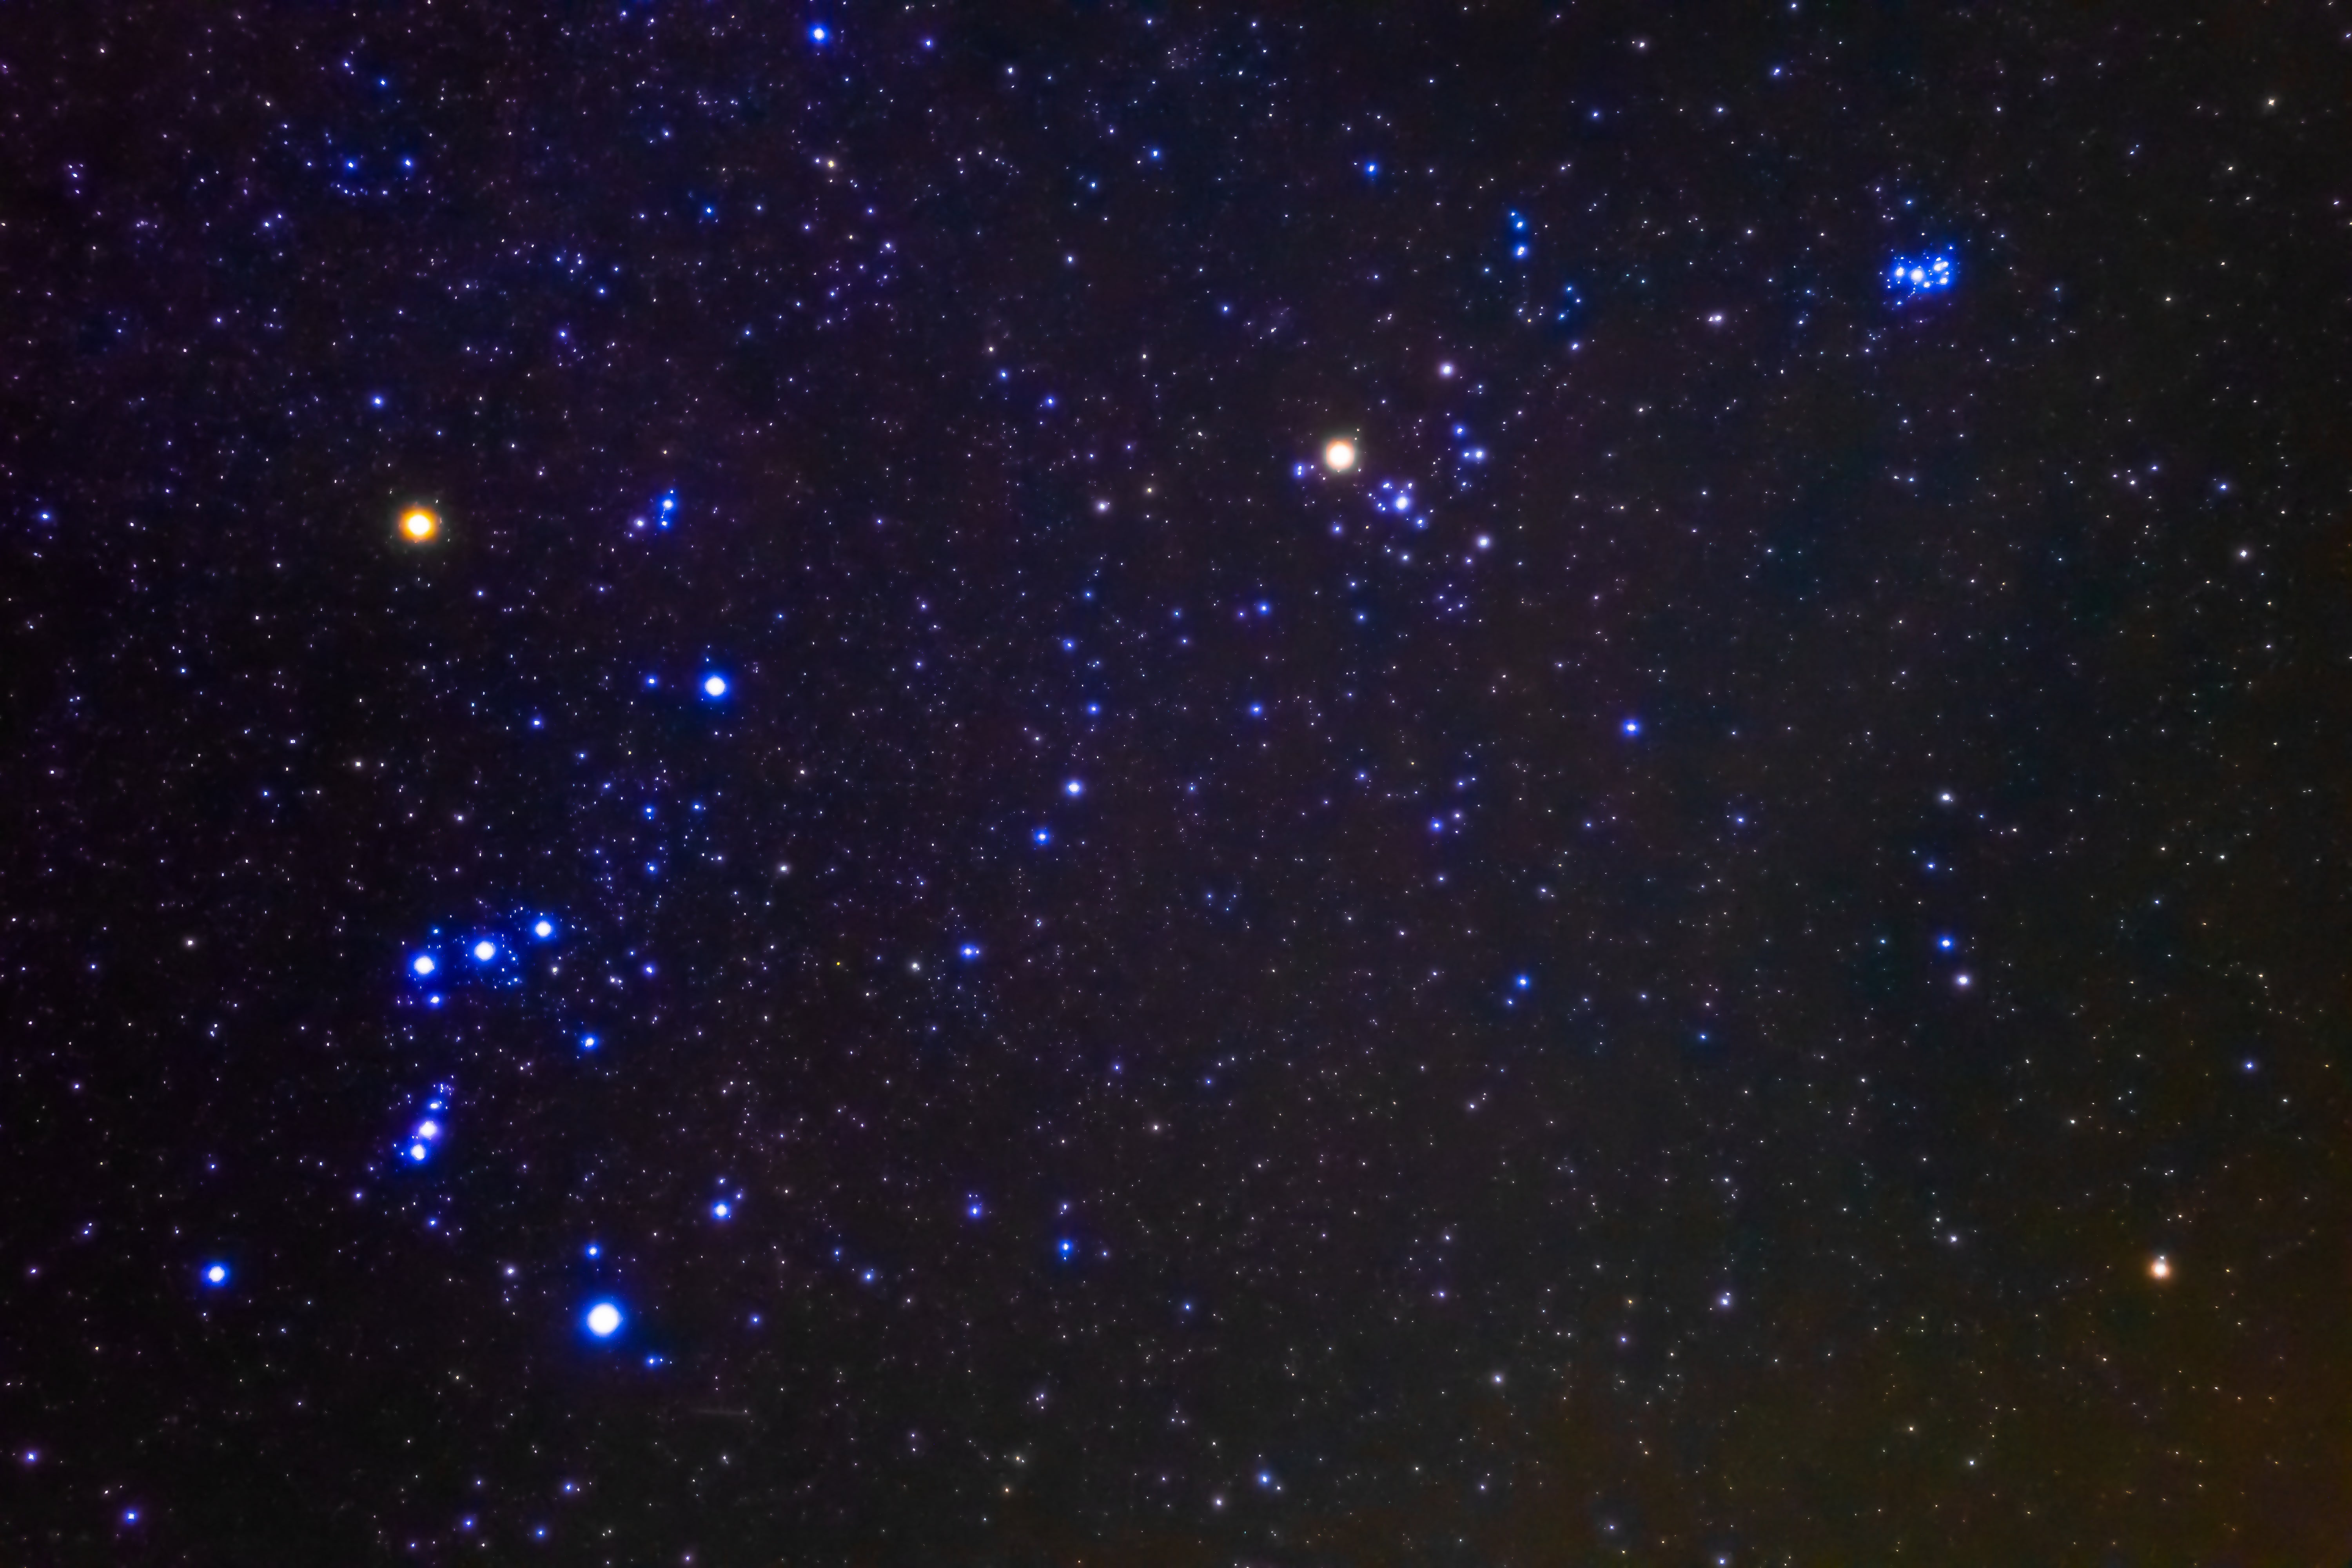 Orion, Taurus and Pleiades